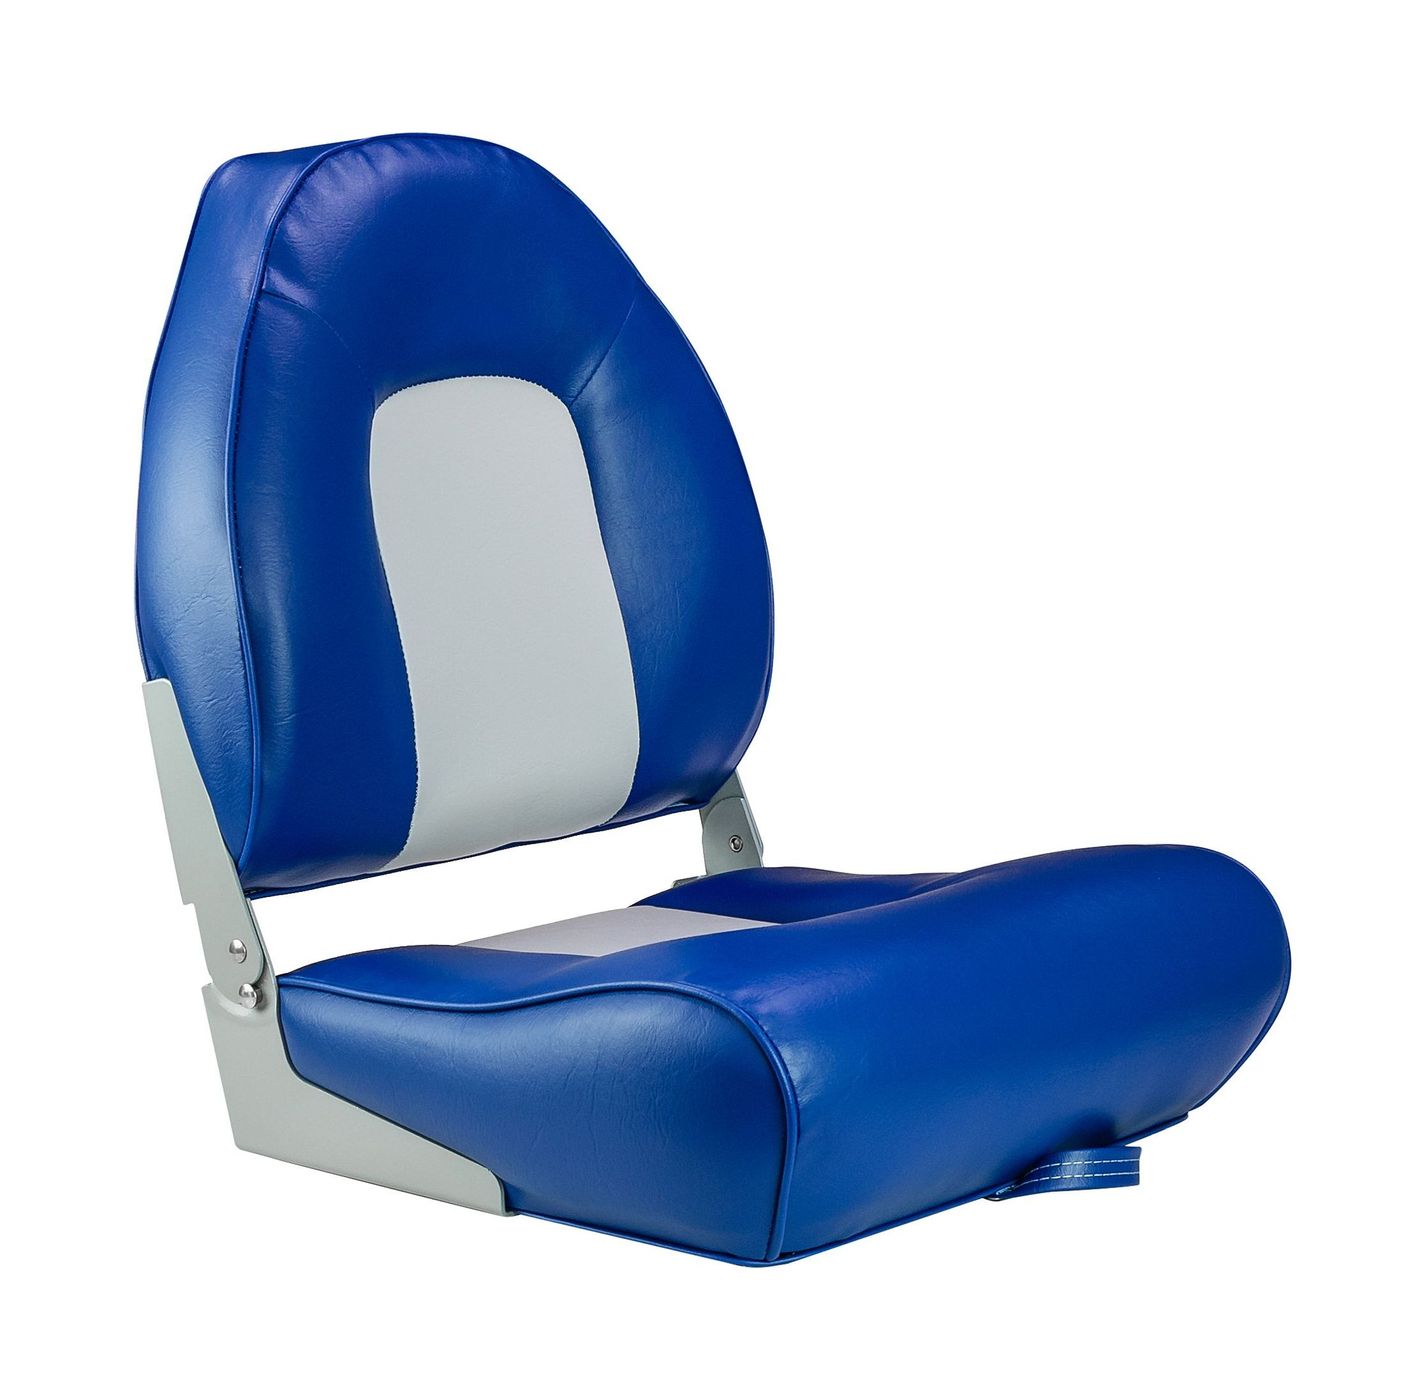 Кресло мягкое складное, обивка винил, цвет синий/серый, Marine Rocket 75116GB-MR стул leset вайд каркас белый велюр синий